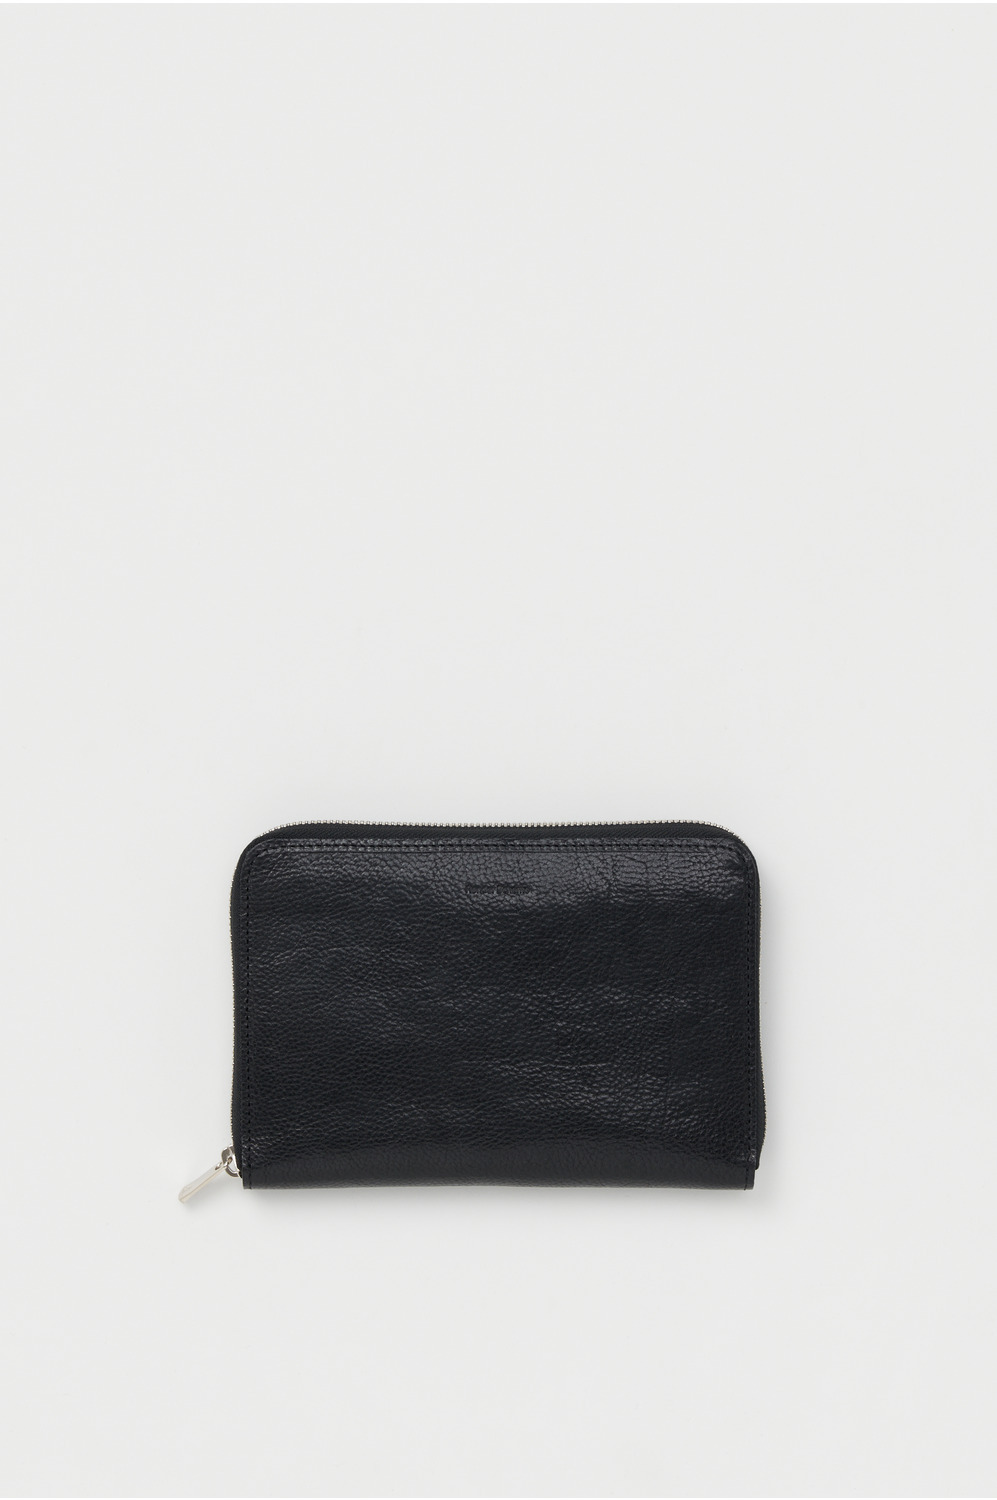 bank zip purse 詳細画像 black 1